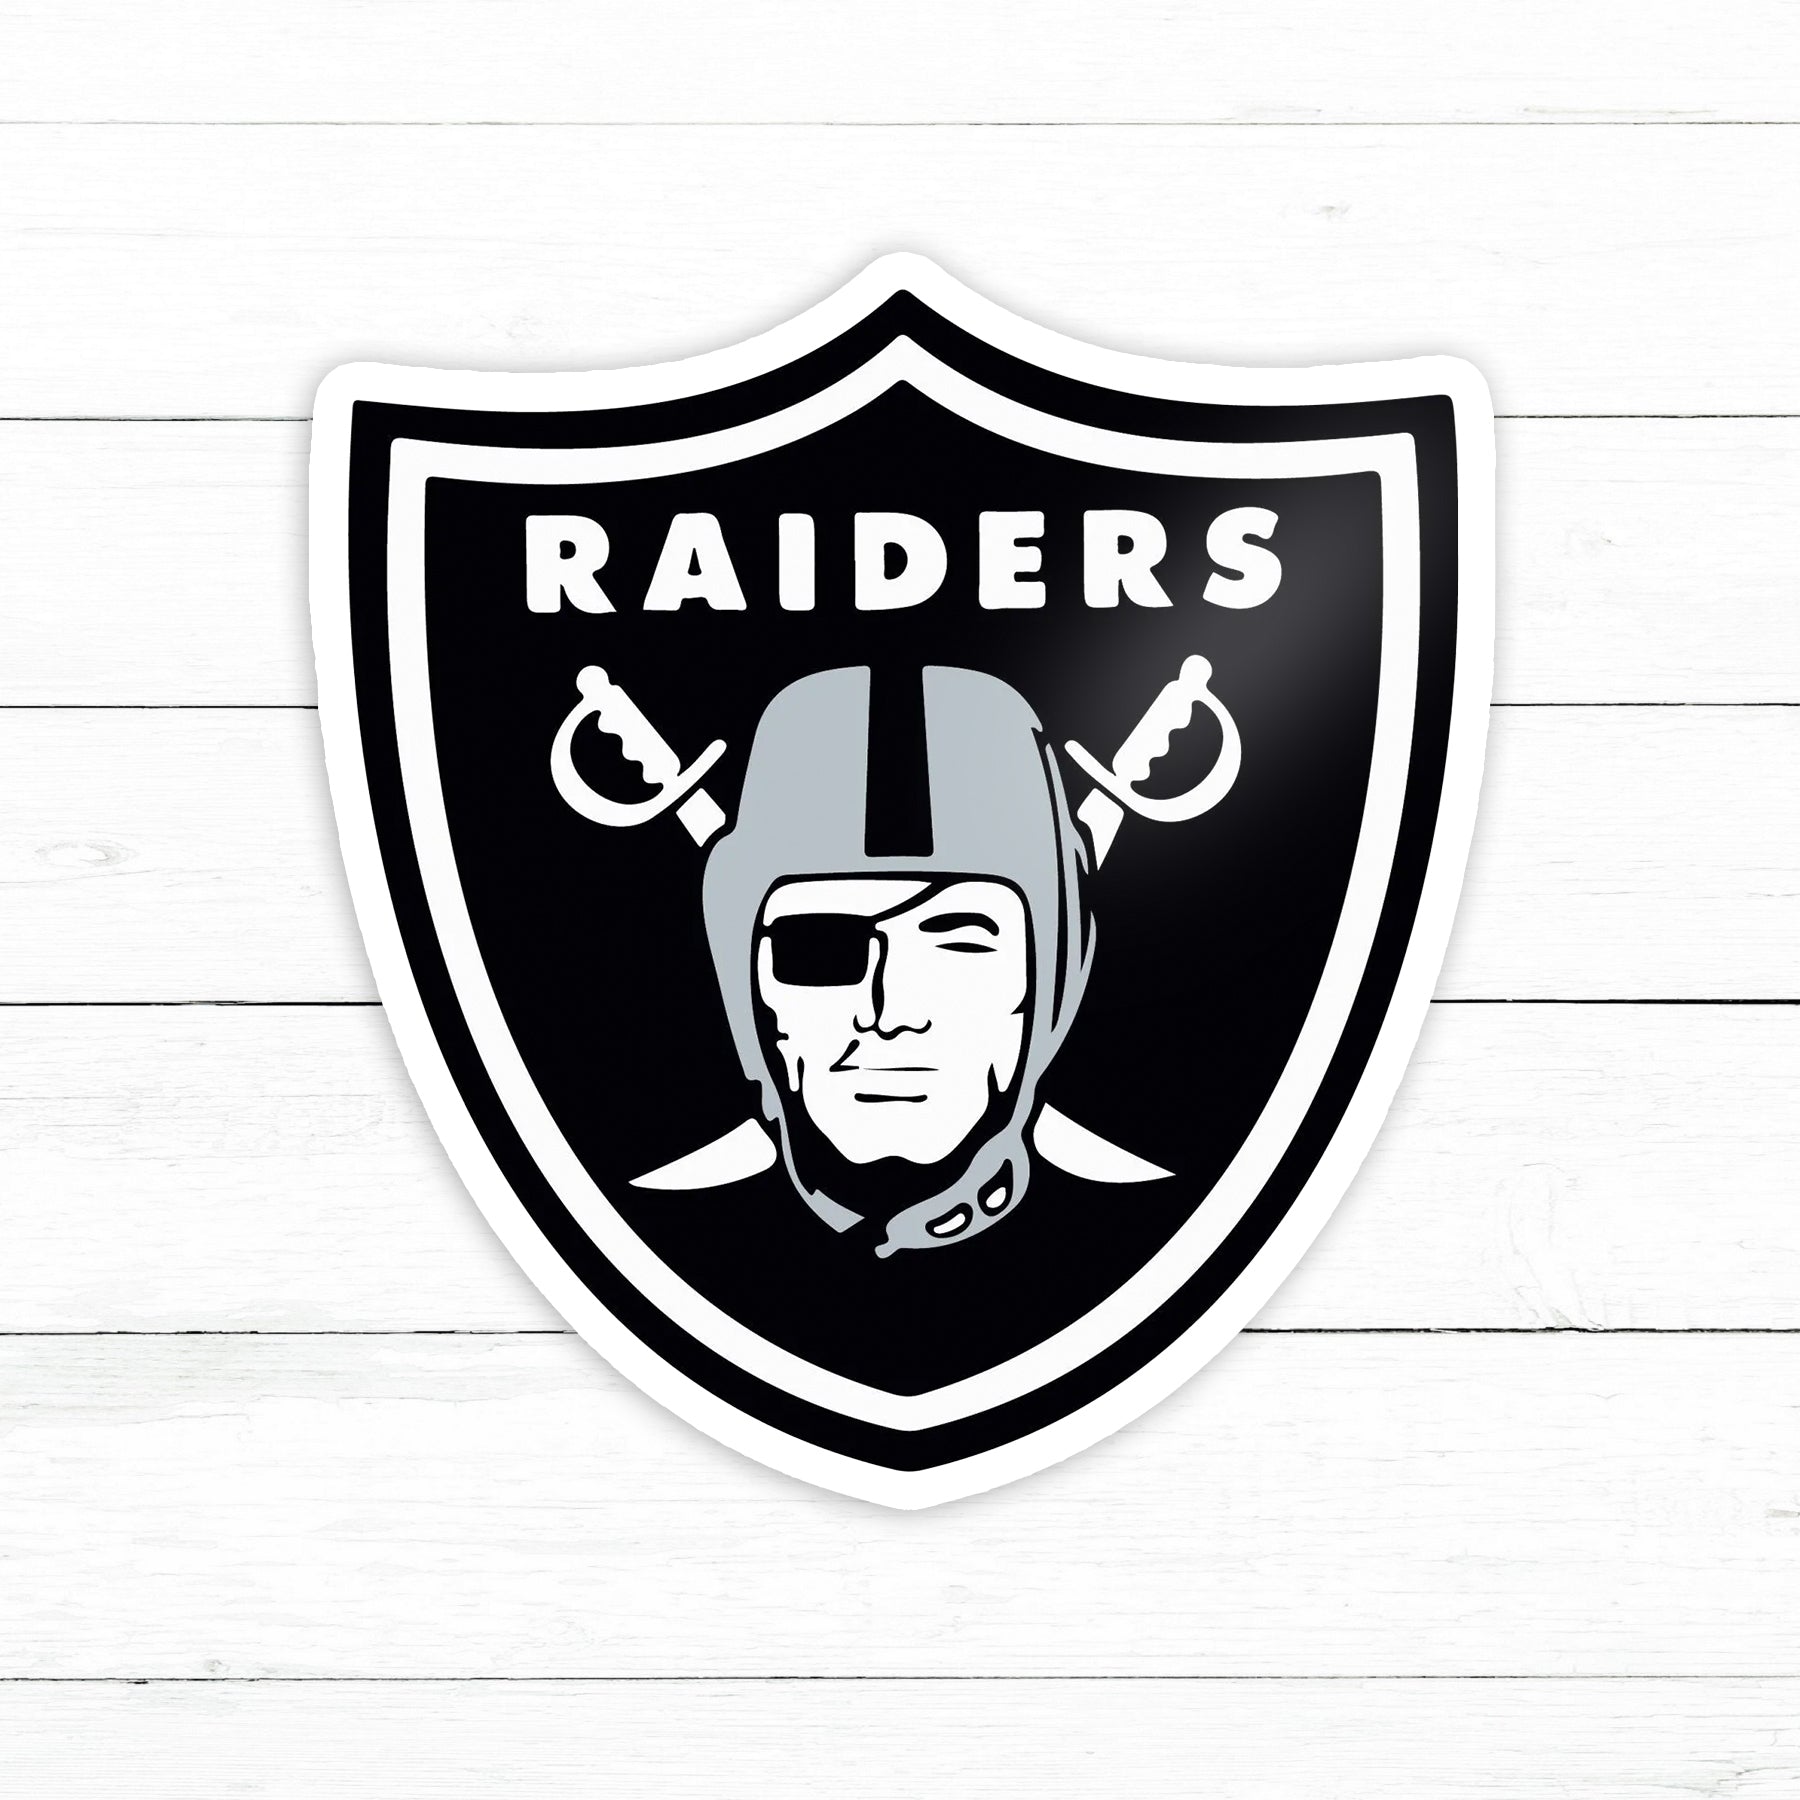 Unique Las Vegas Raiders decal stickers for 2022 - Inspire Uplift